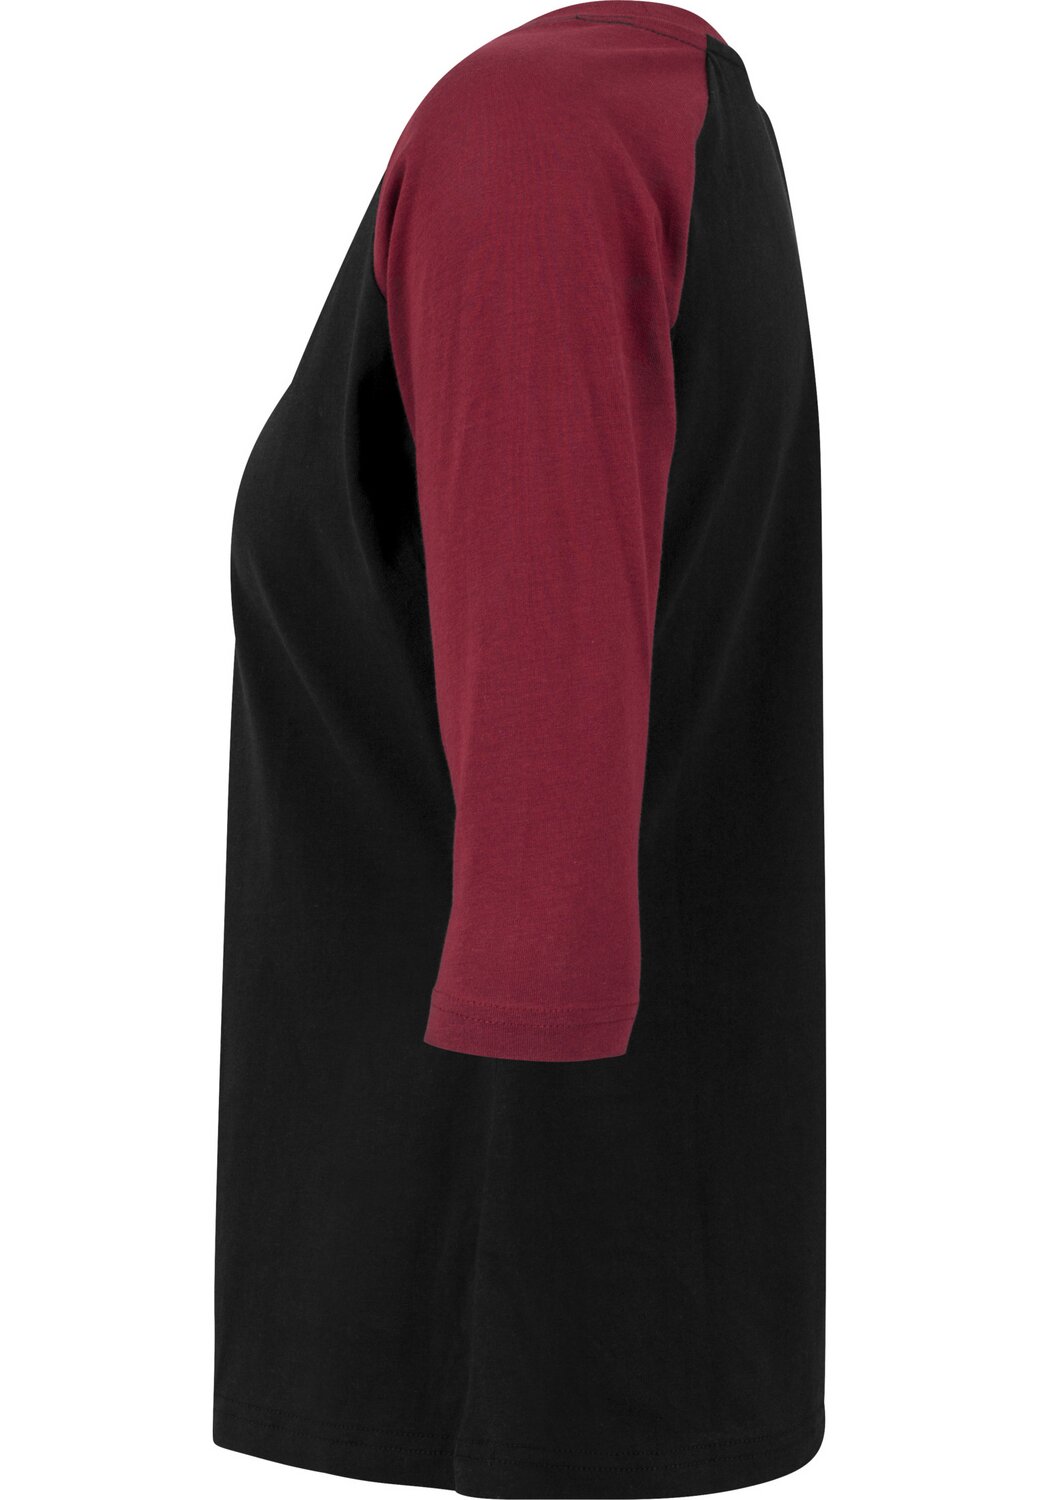 MAXISCOOT Contrast Raglan Ladies | 3/4 black/burgundy T-Shirt